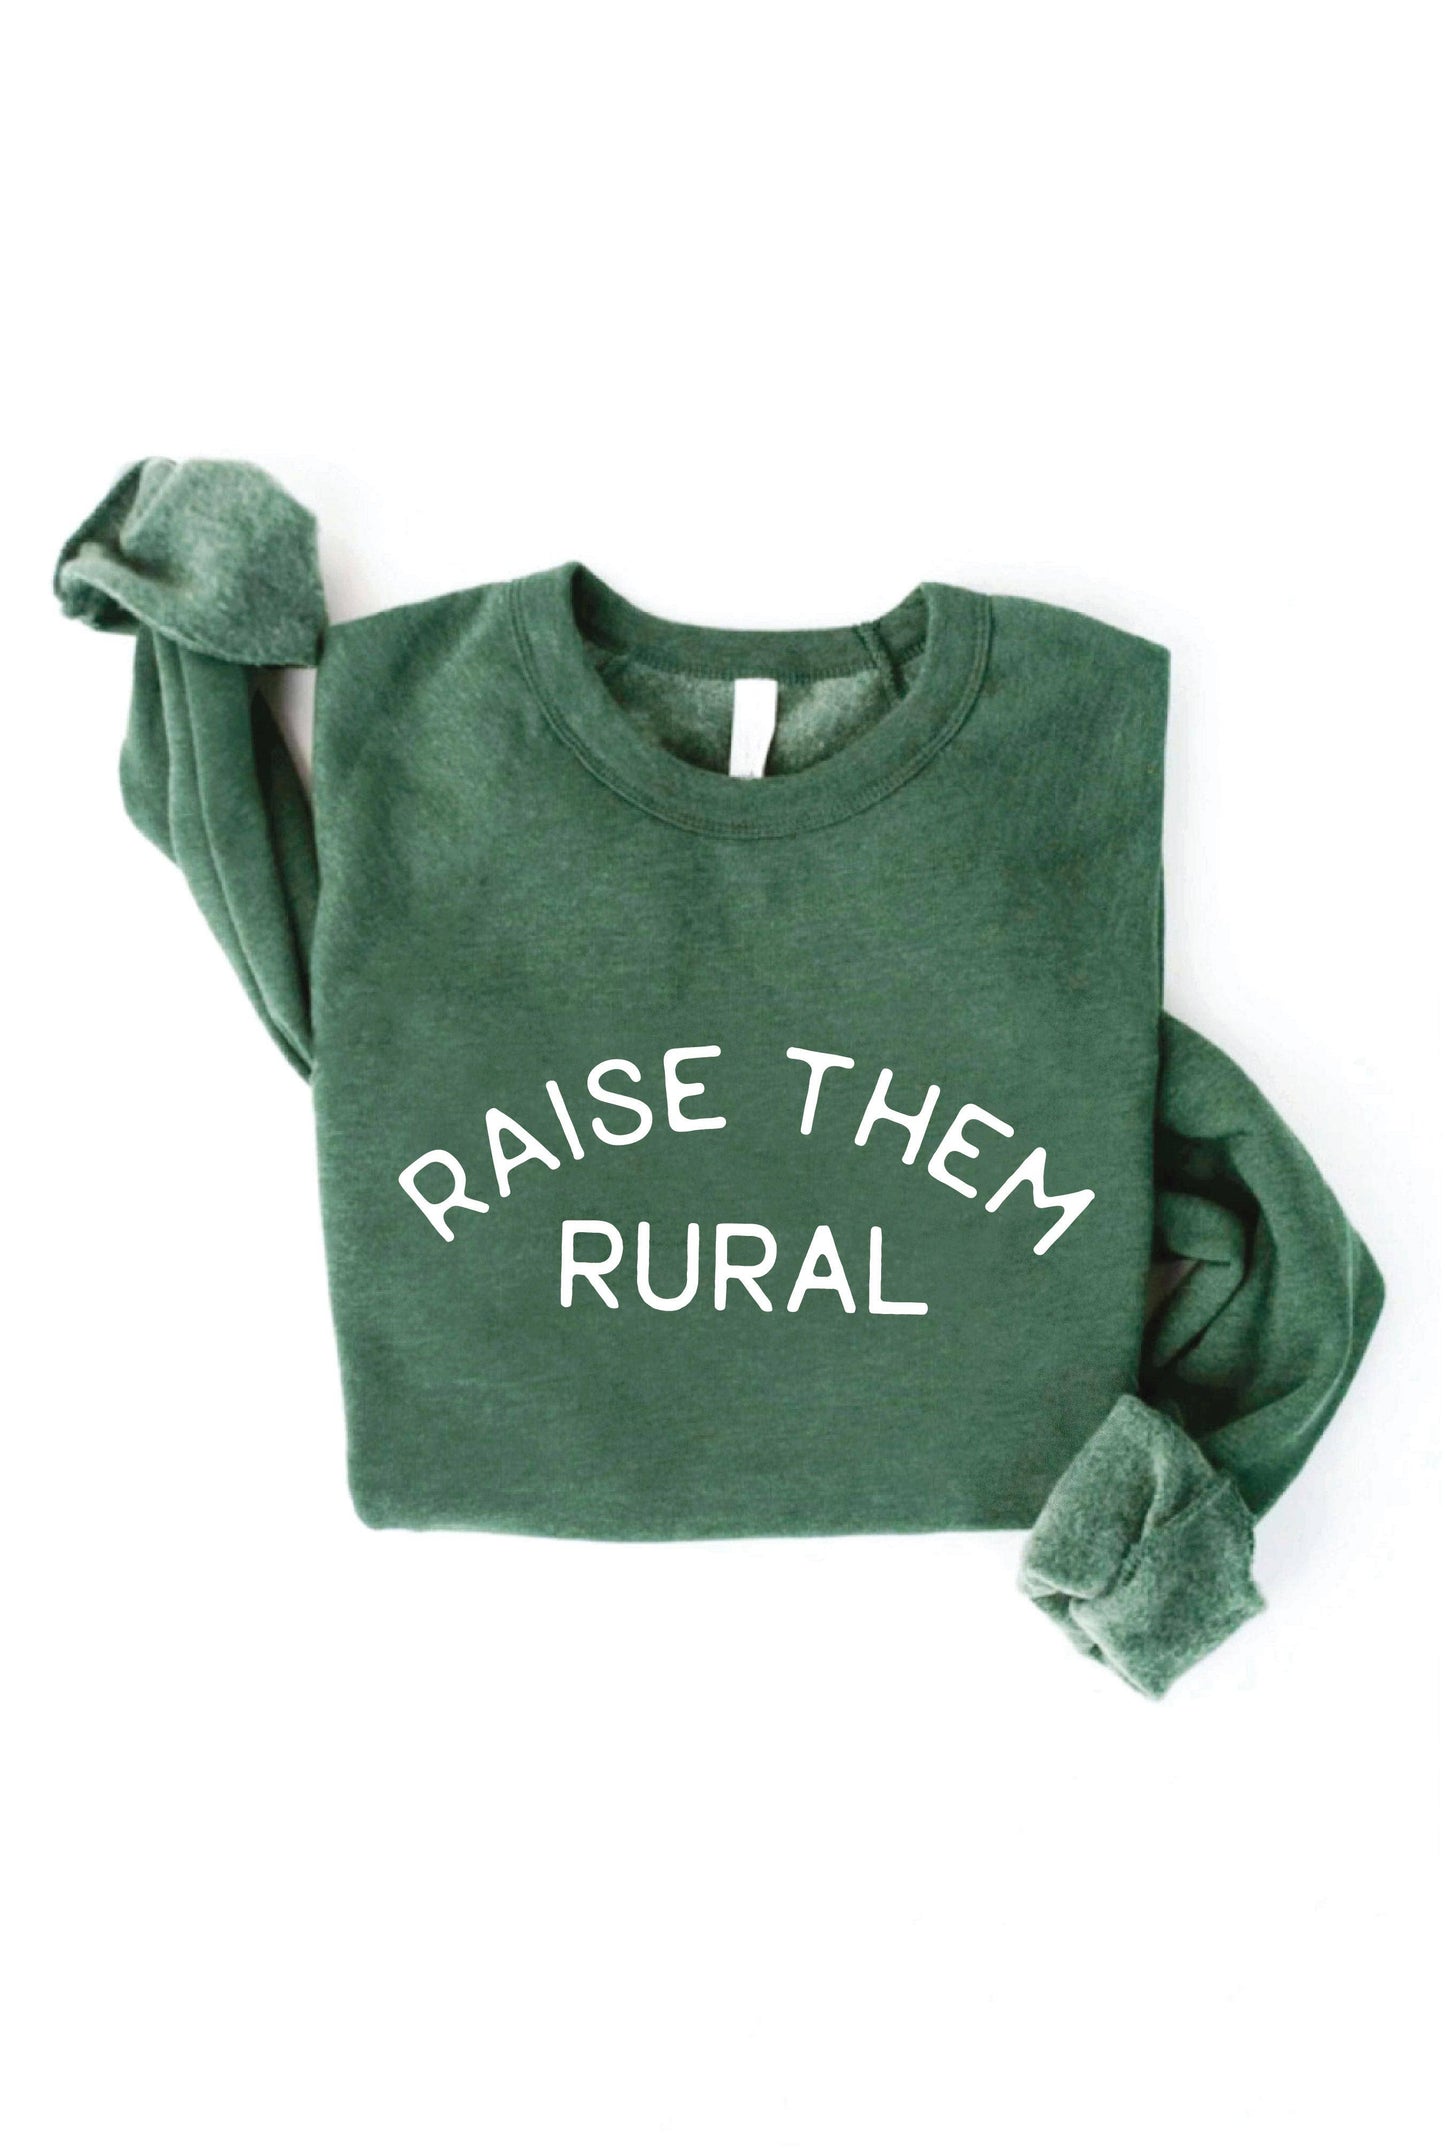 RAISE THEM RURAL Graphic Sweatshirt